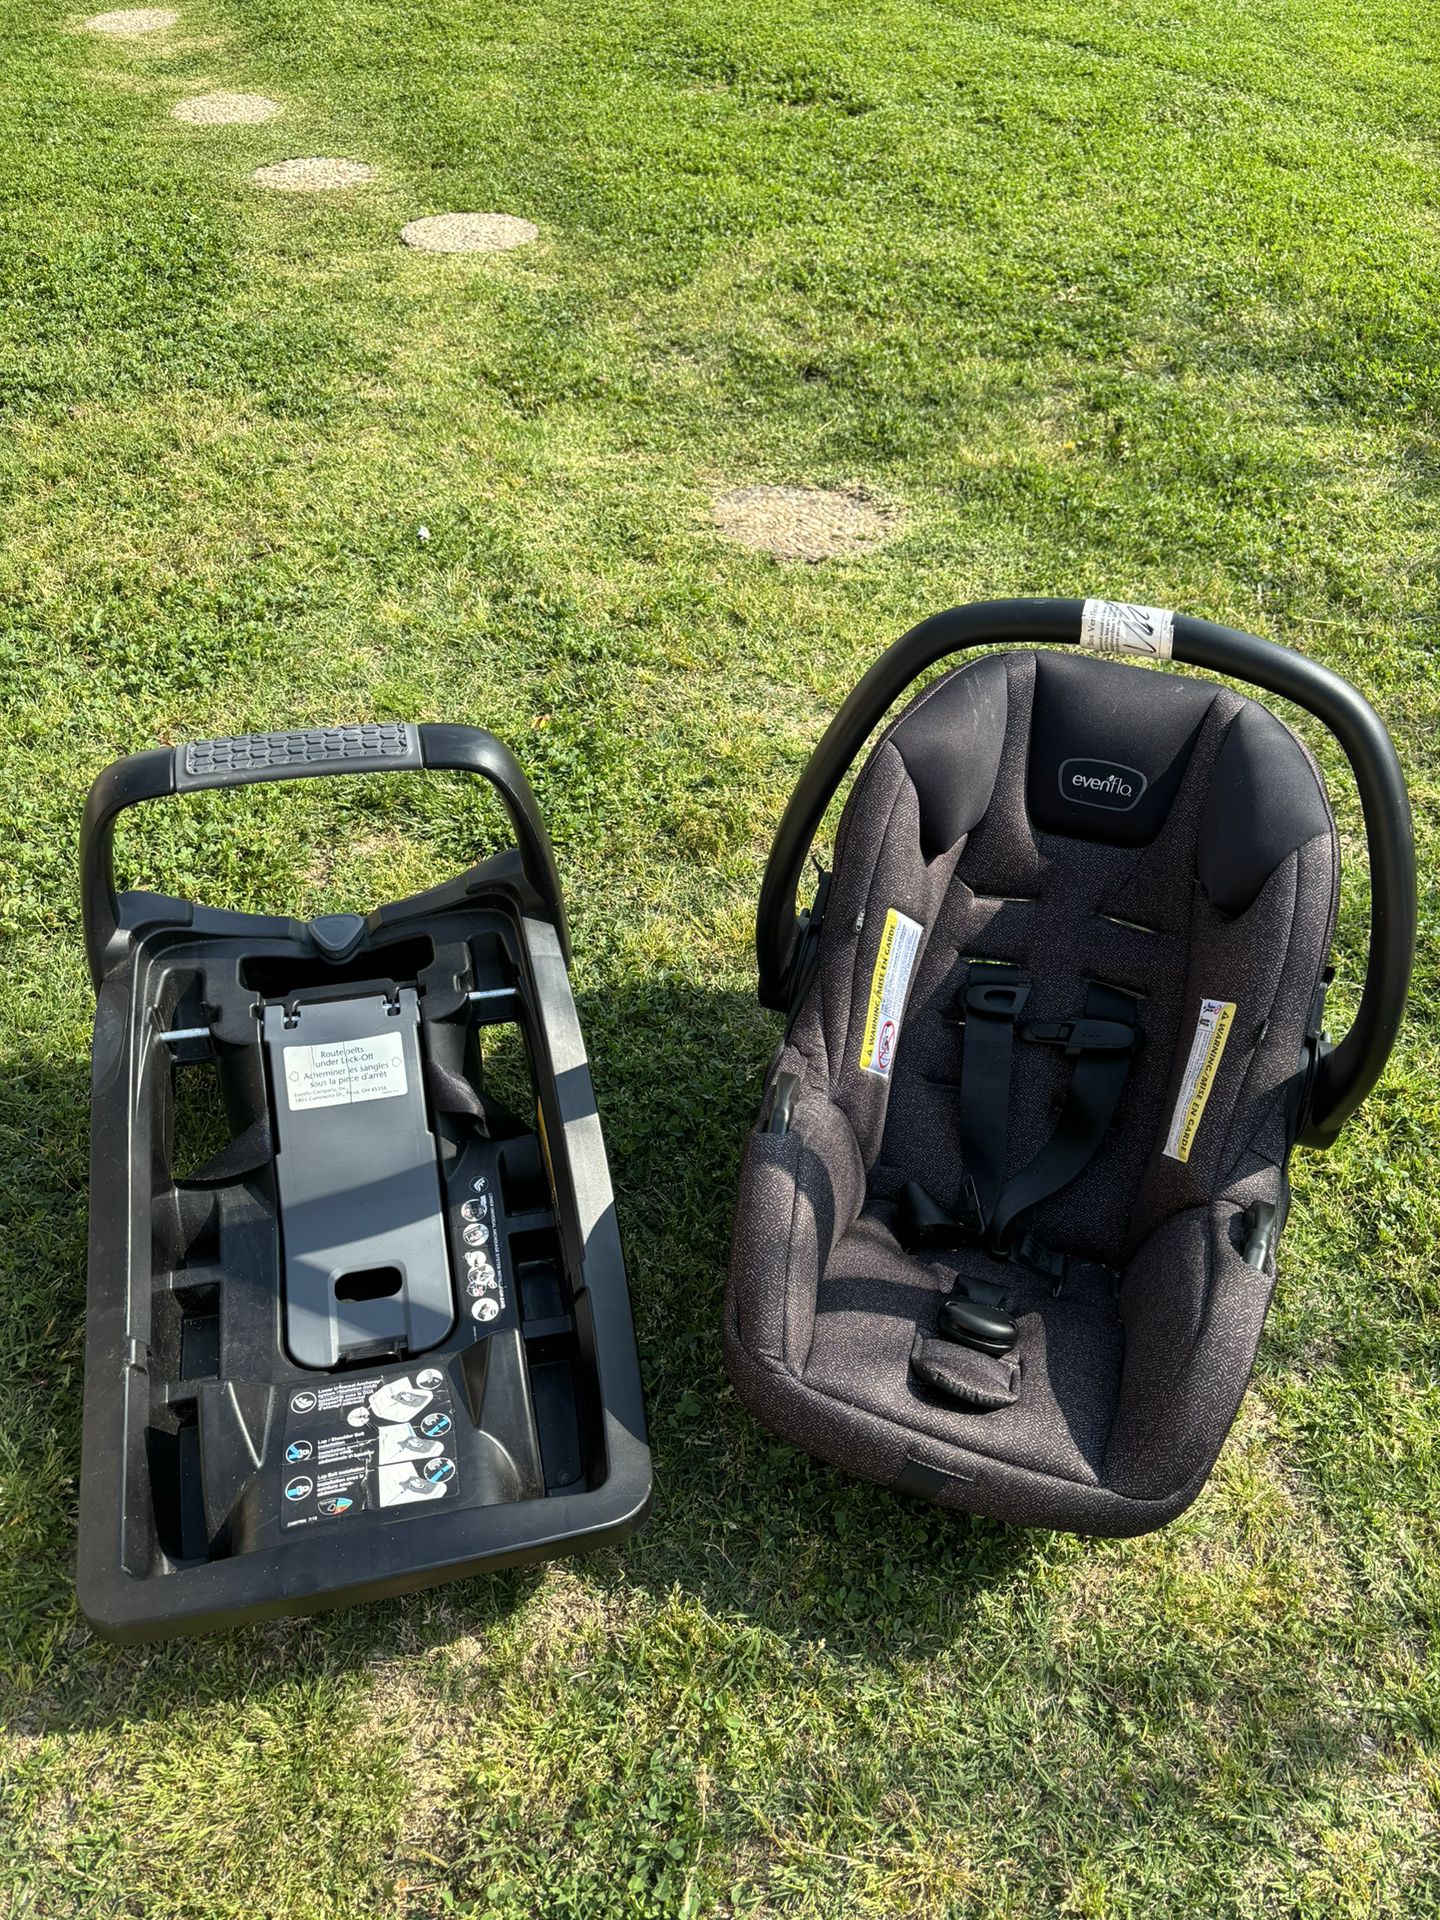 Evenflo LiteMax Infant Car Seat 